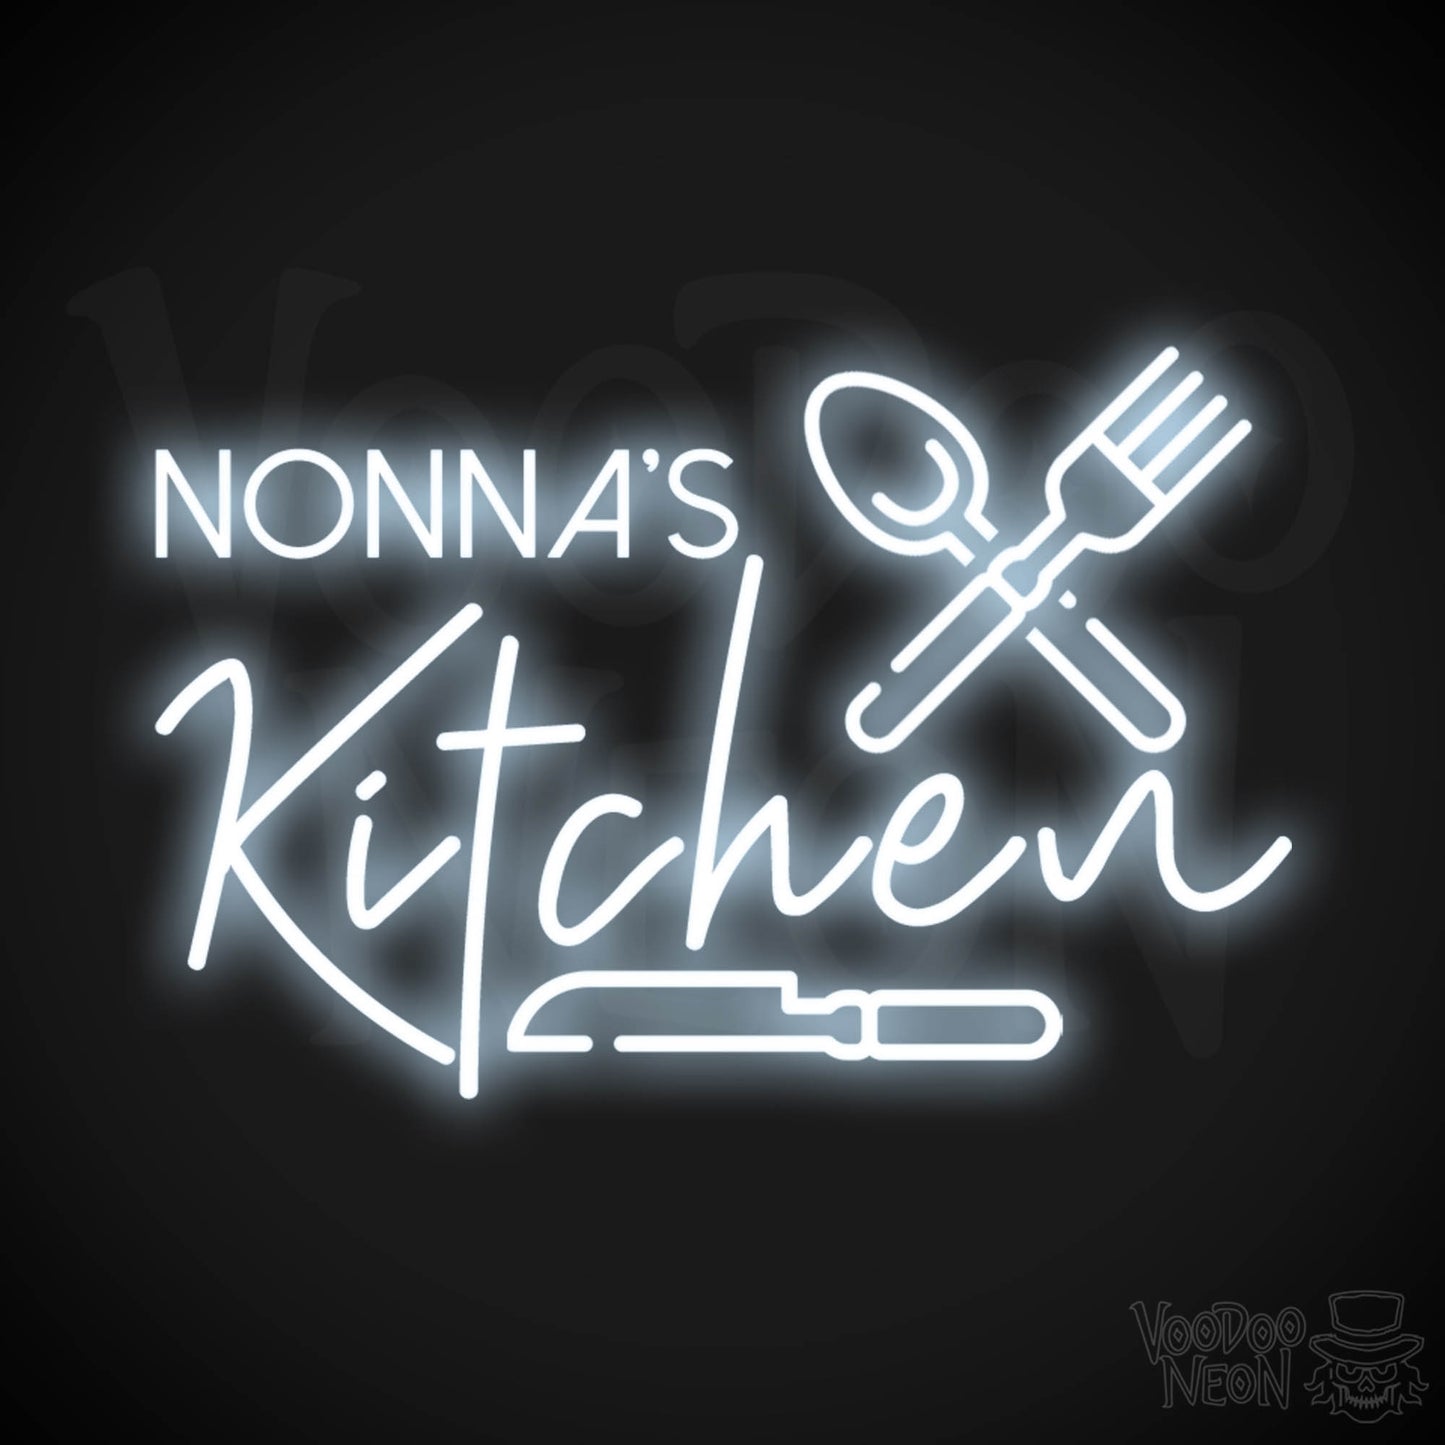 Nonna's Kitchen Neon Sign - Neon Nona's Kitchen Sign - Wall Art - Color Cool White